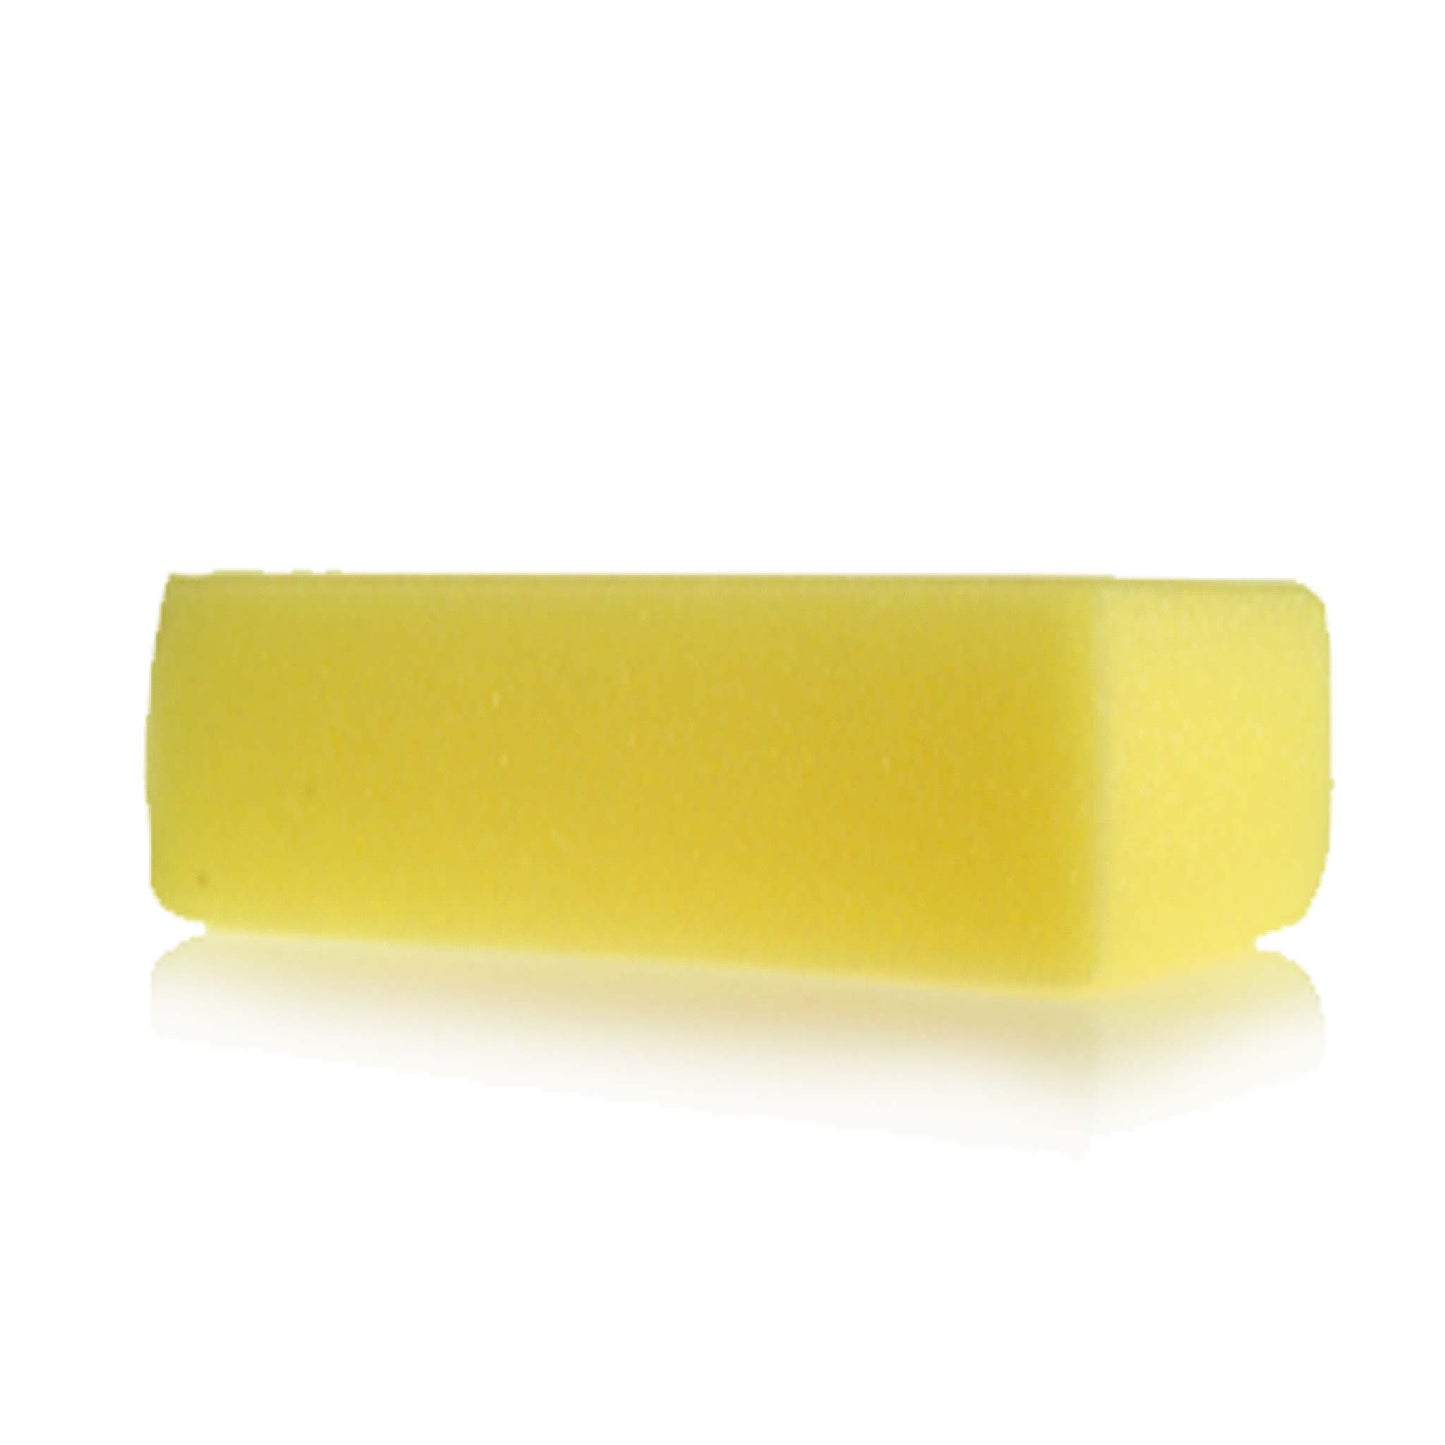 Sponge™ - Célula cerrada de peso pesado sin silicona